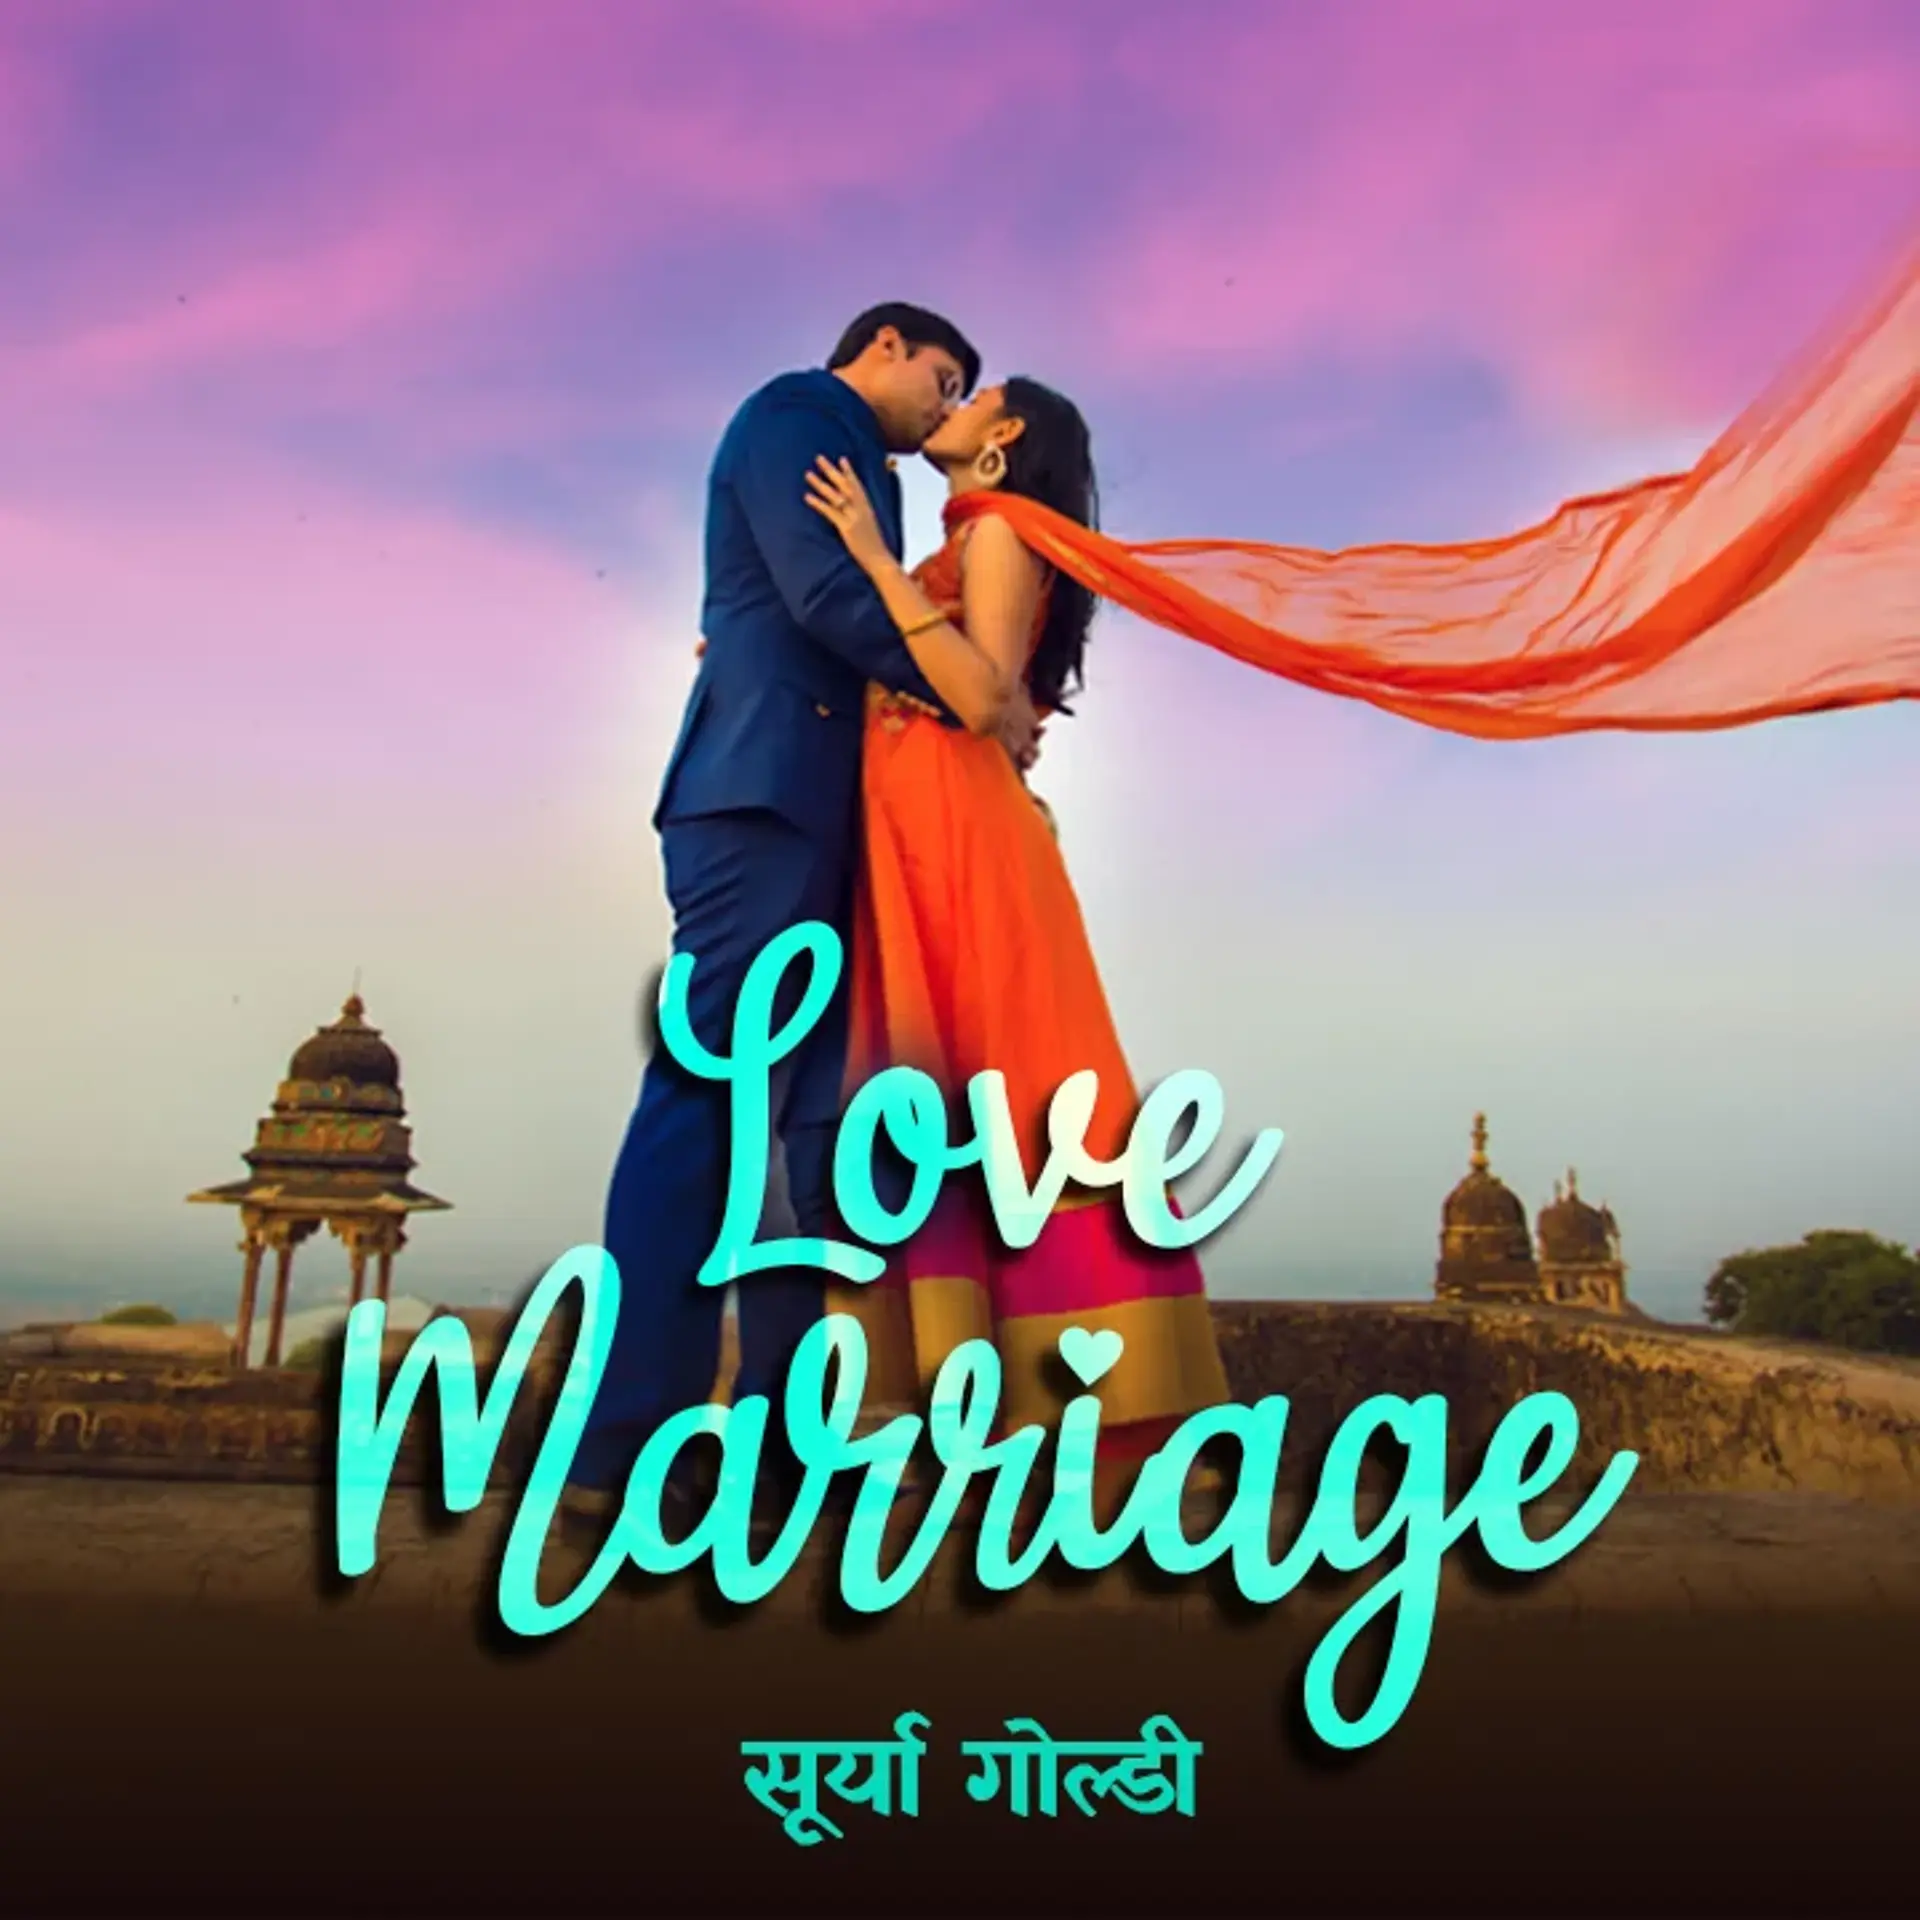 Love Marriage - एक प्रेम व्यथा: Part 8